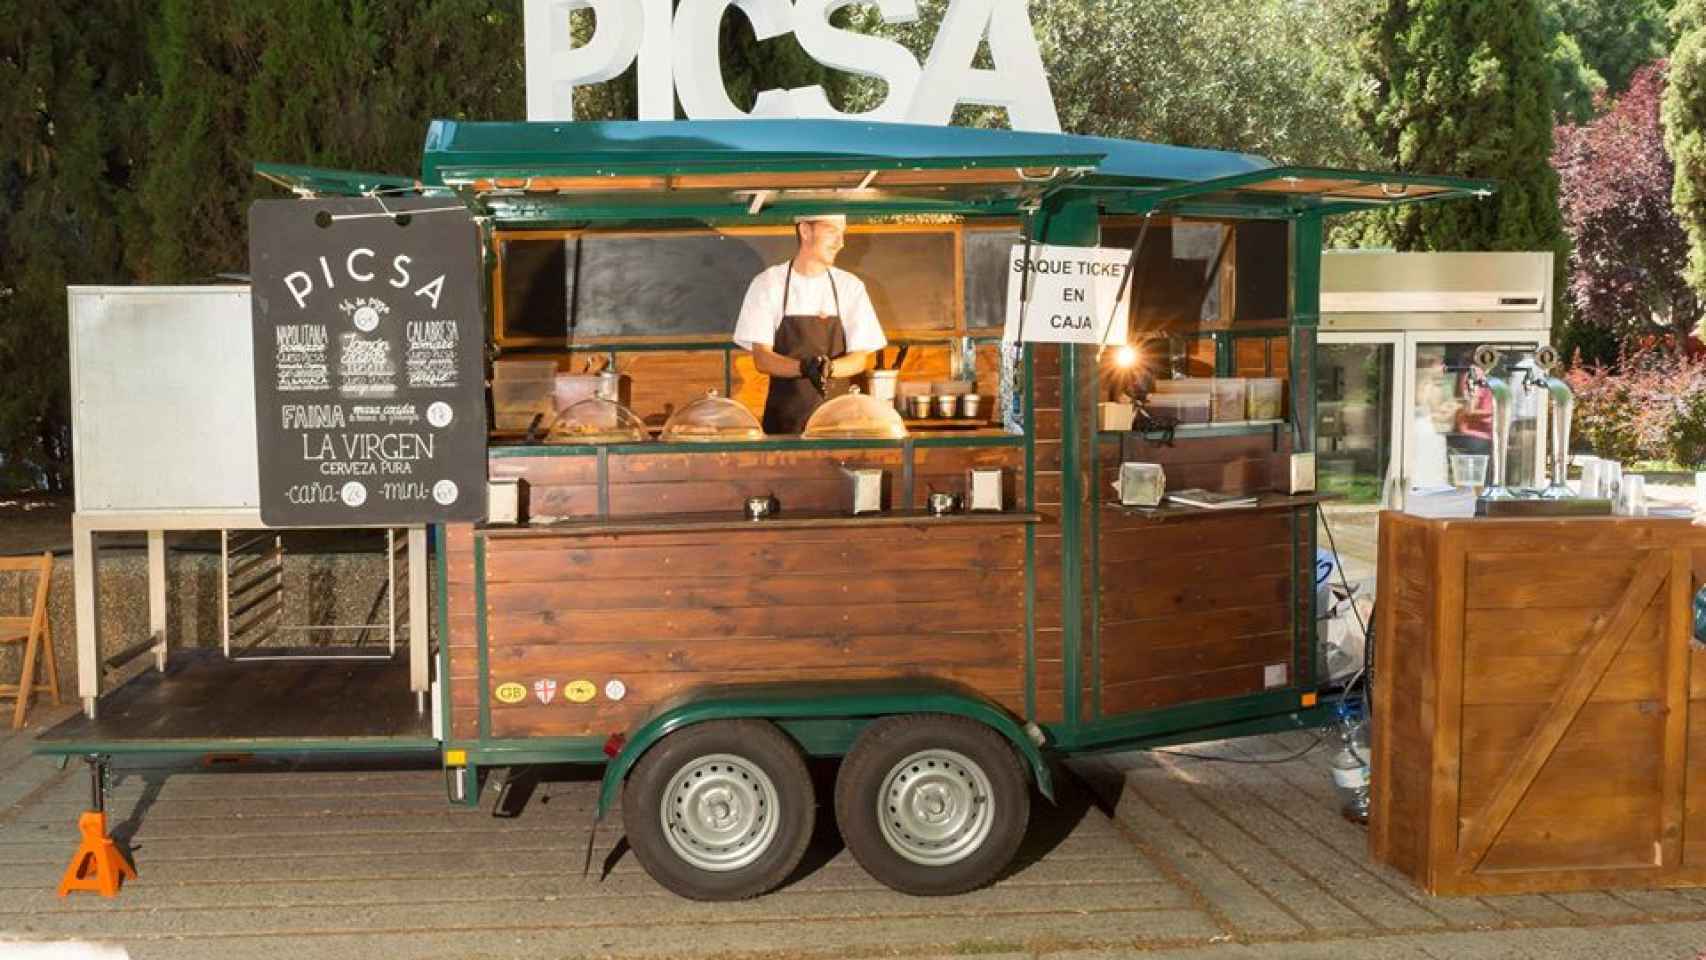 La cocina fusión de Picsa se vuelve itinerante en esta gastroneta.